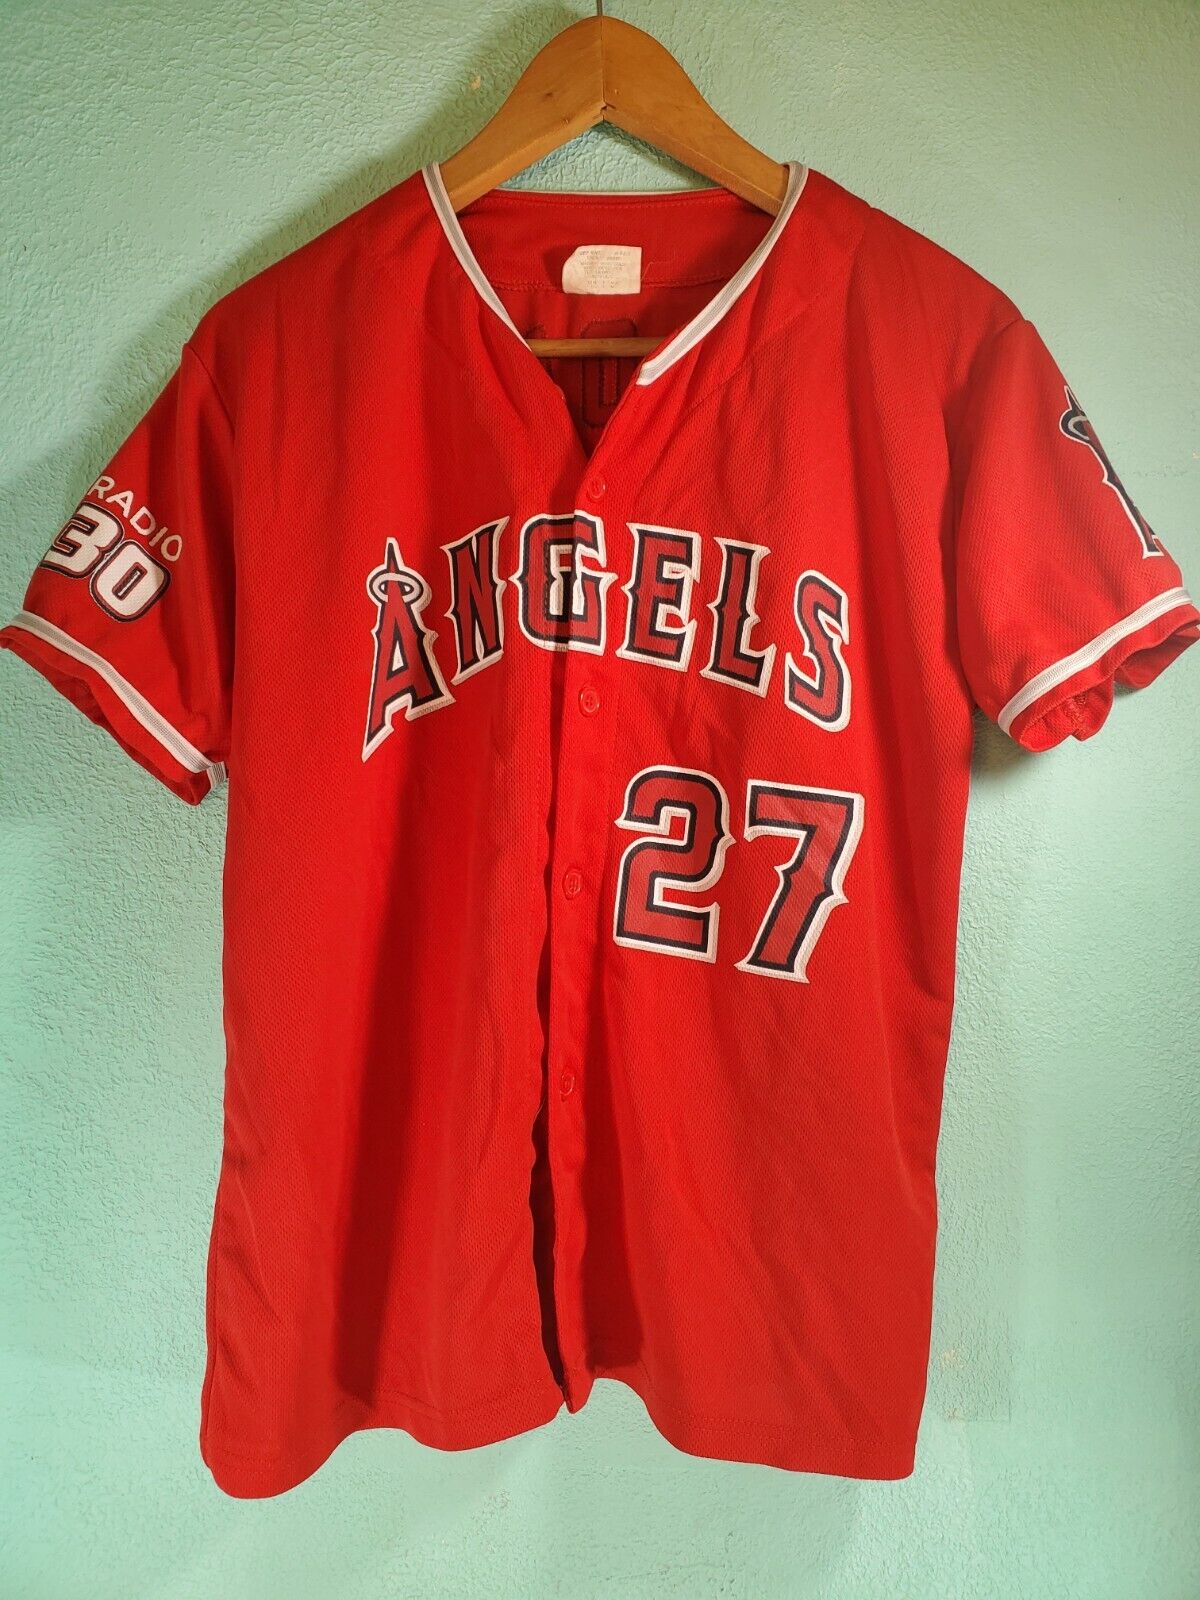 Cheap Baseball Jersey Shirts Youth Los Angeles Angels Jersey #27 Mike Trout  Jersey boys 100% Stitched Logos Kids Sports Jerseys - купить по выгодной  цене